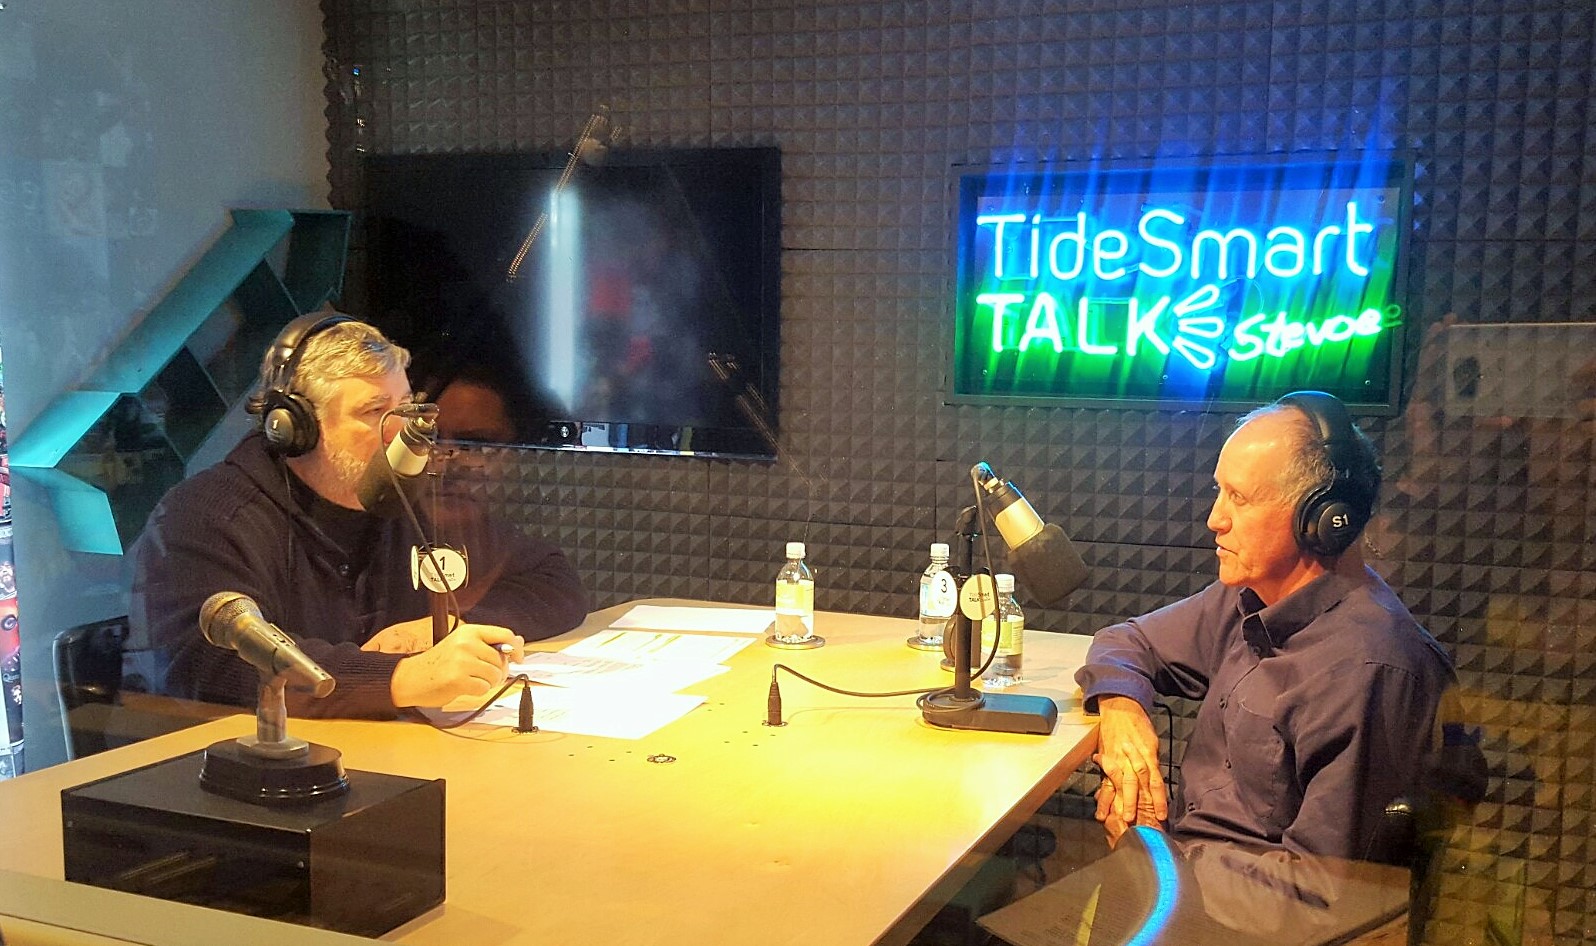 Host of TideSmart Talk with Stevoe, Steve Woods, welcomed Baxter State Park Director, Jensen Bissell (at right).